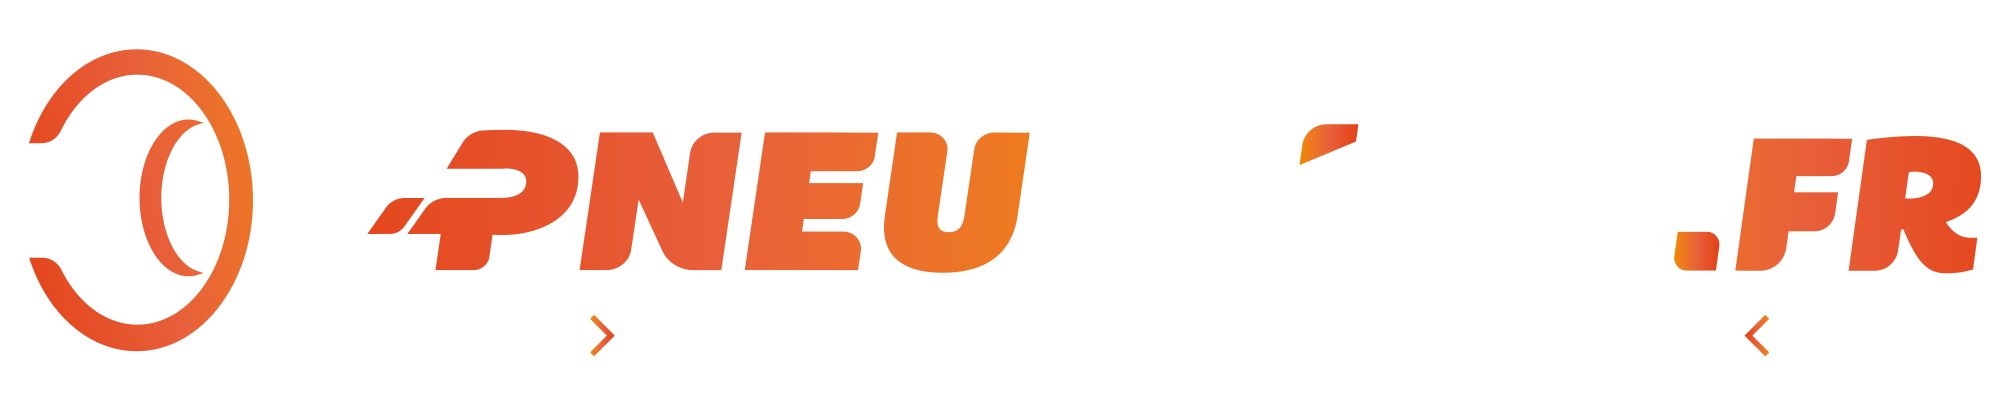 Pneuclick.fr